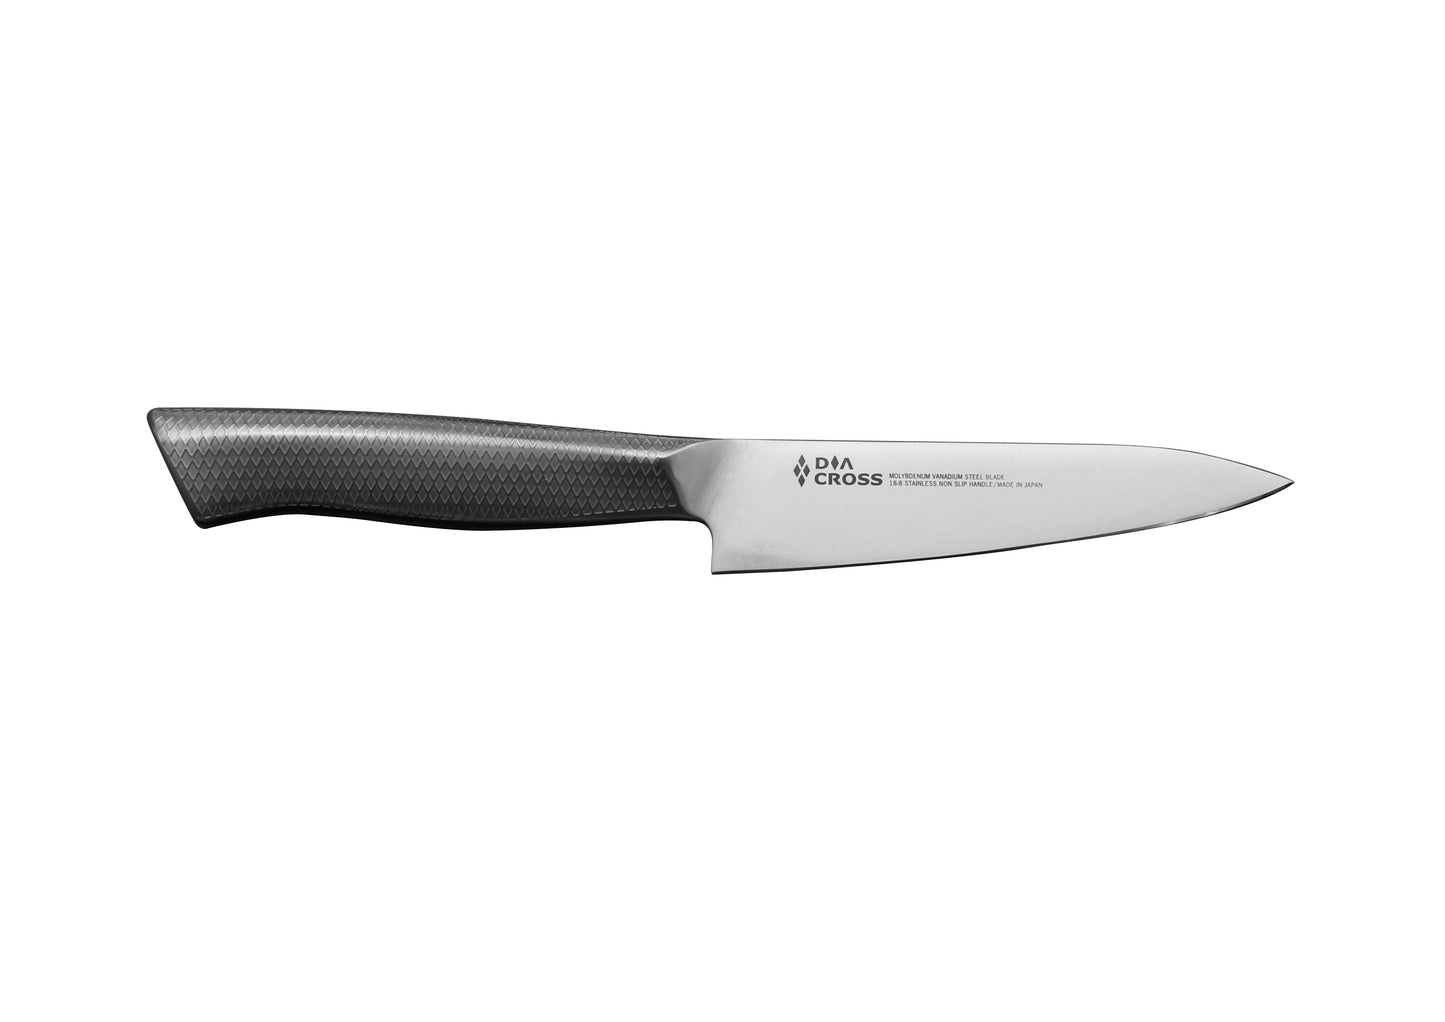 DC-600 - 4.8 in  Utility knife. Molybdenum Vanadium Steel blade 18/8 stainless steel handle. Made by Sumikama Cutlery (Kasumi knives).